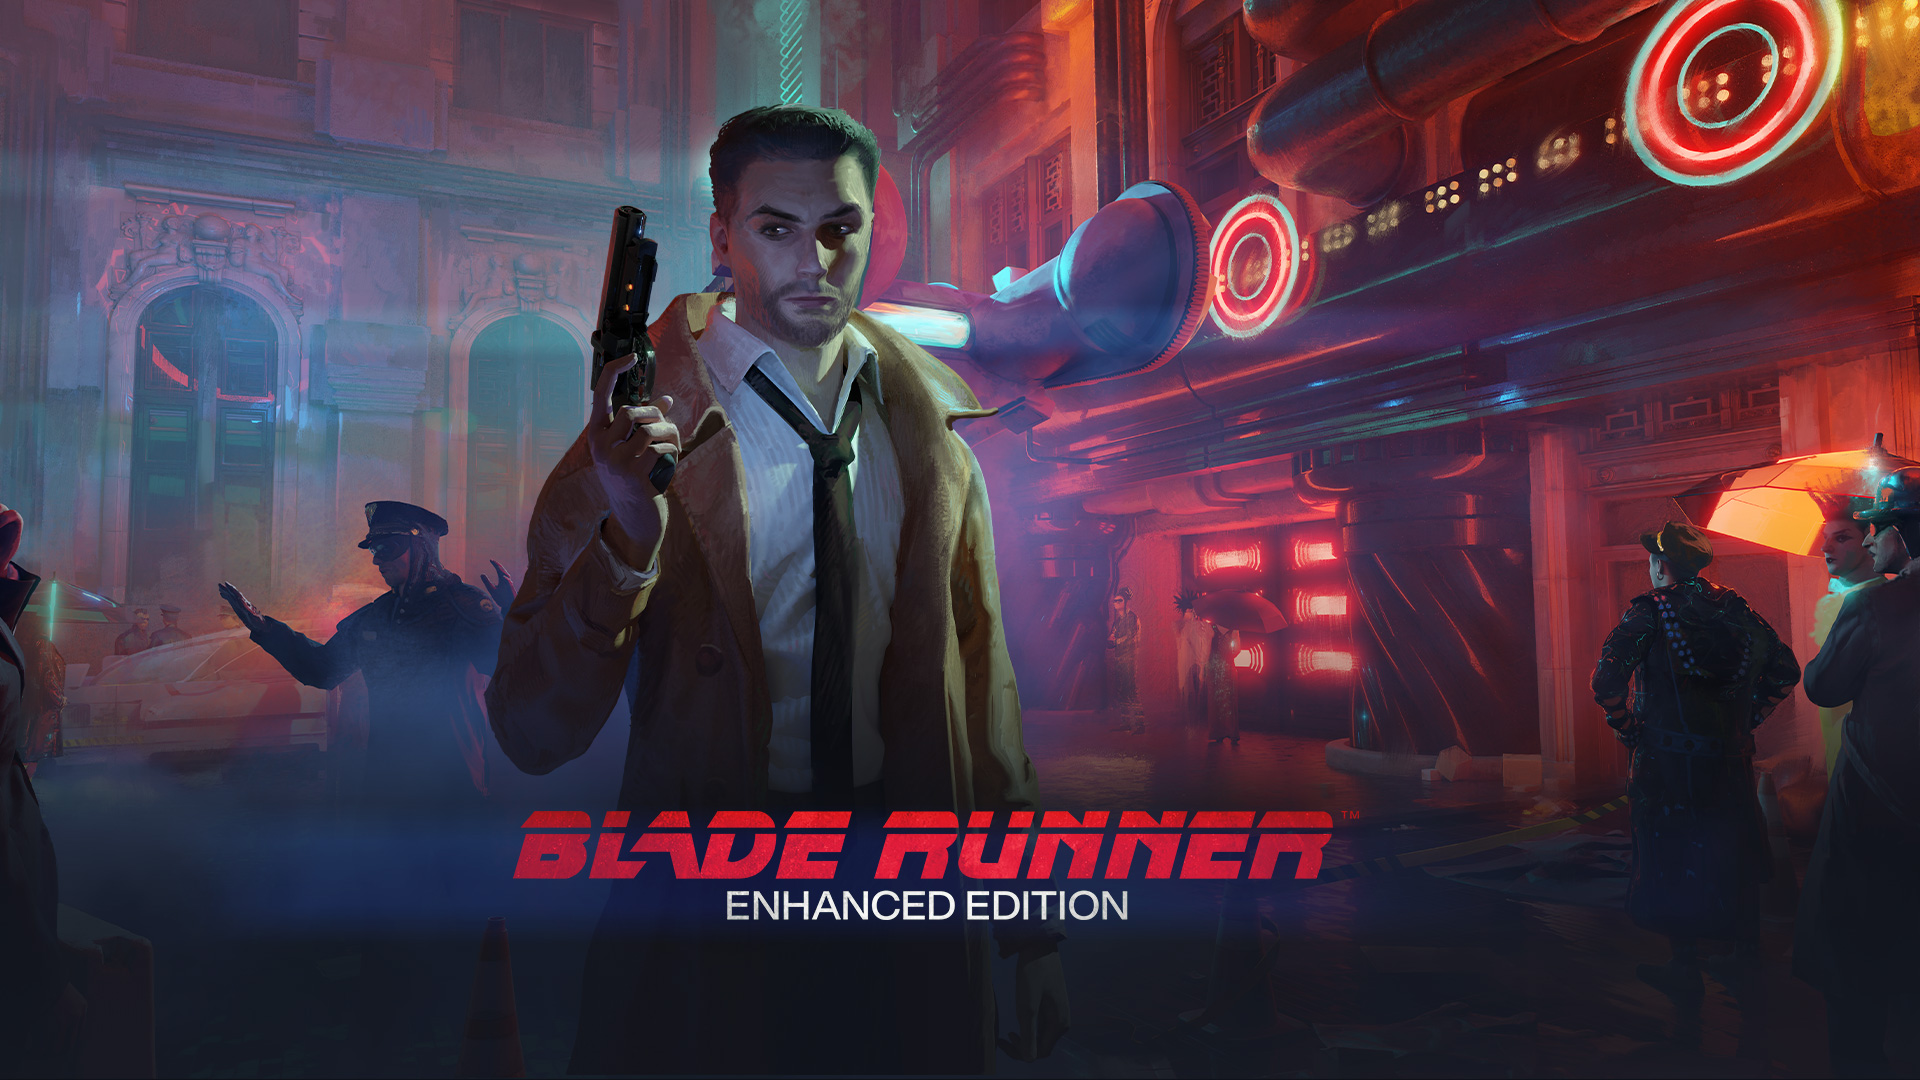 Blade Runner Hero image